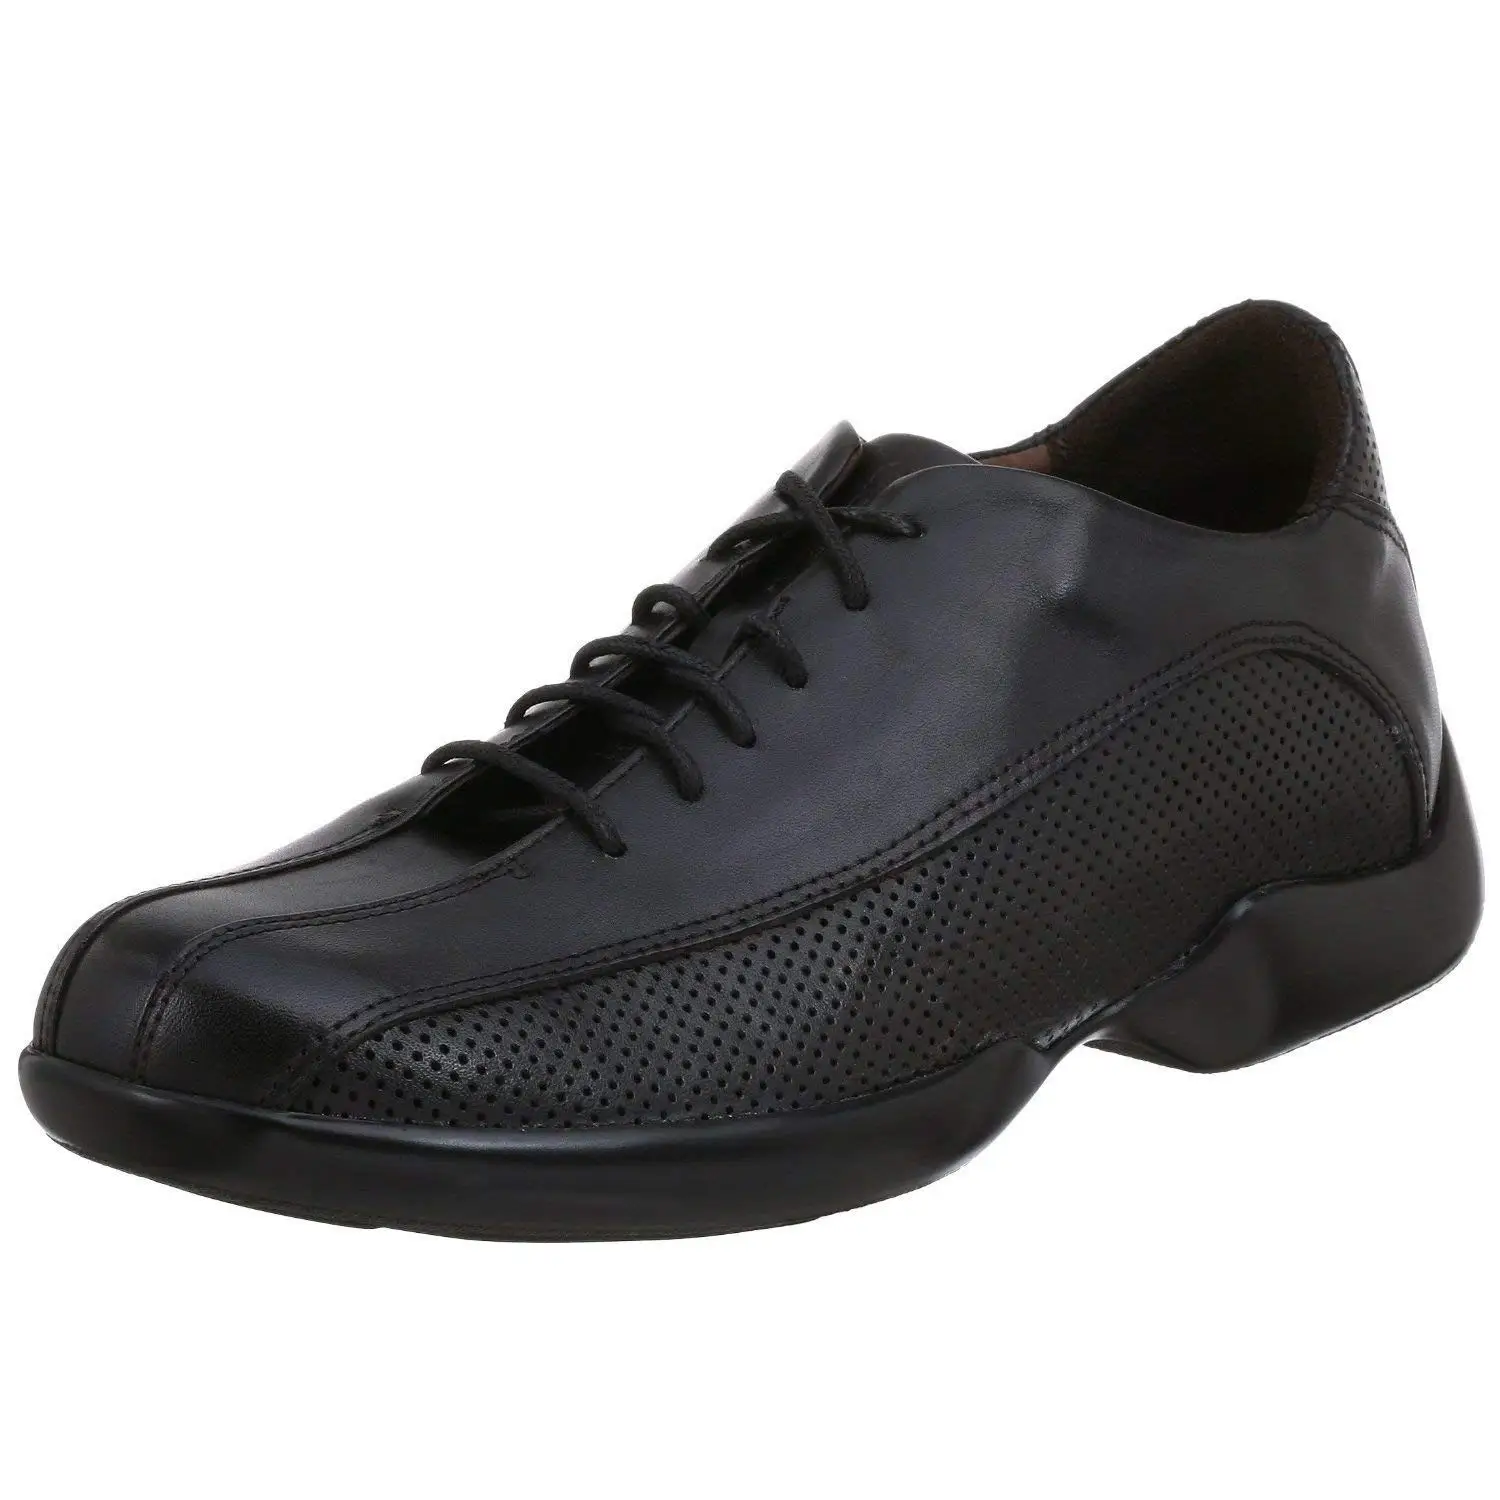 orthotic friendly men's shoes